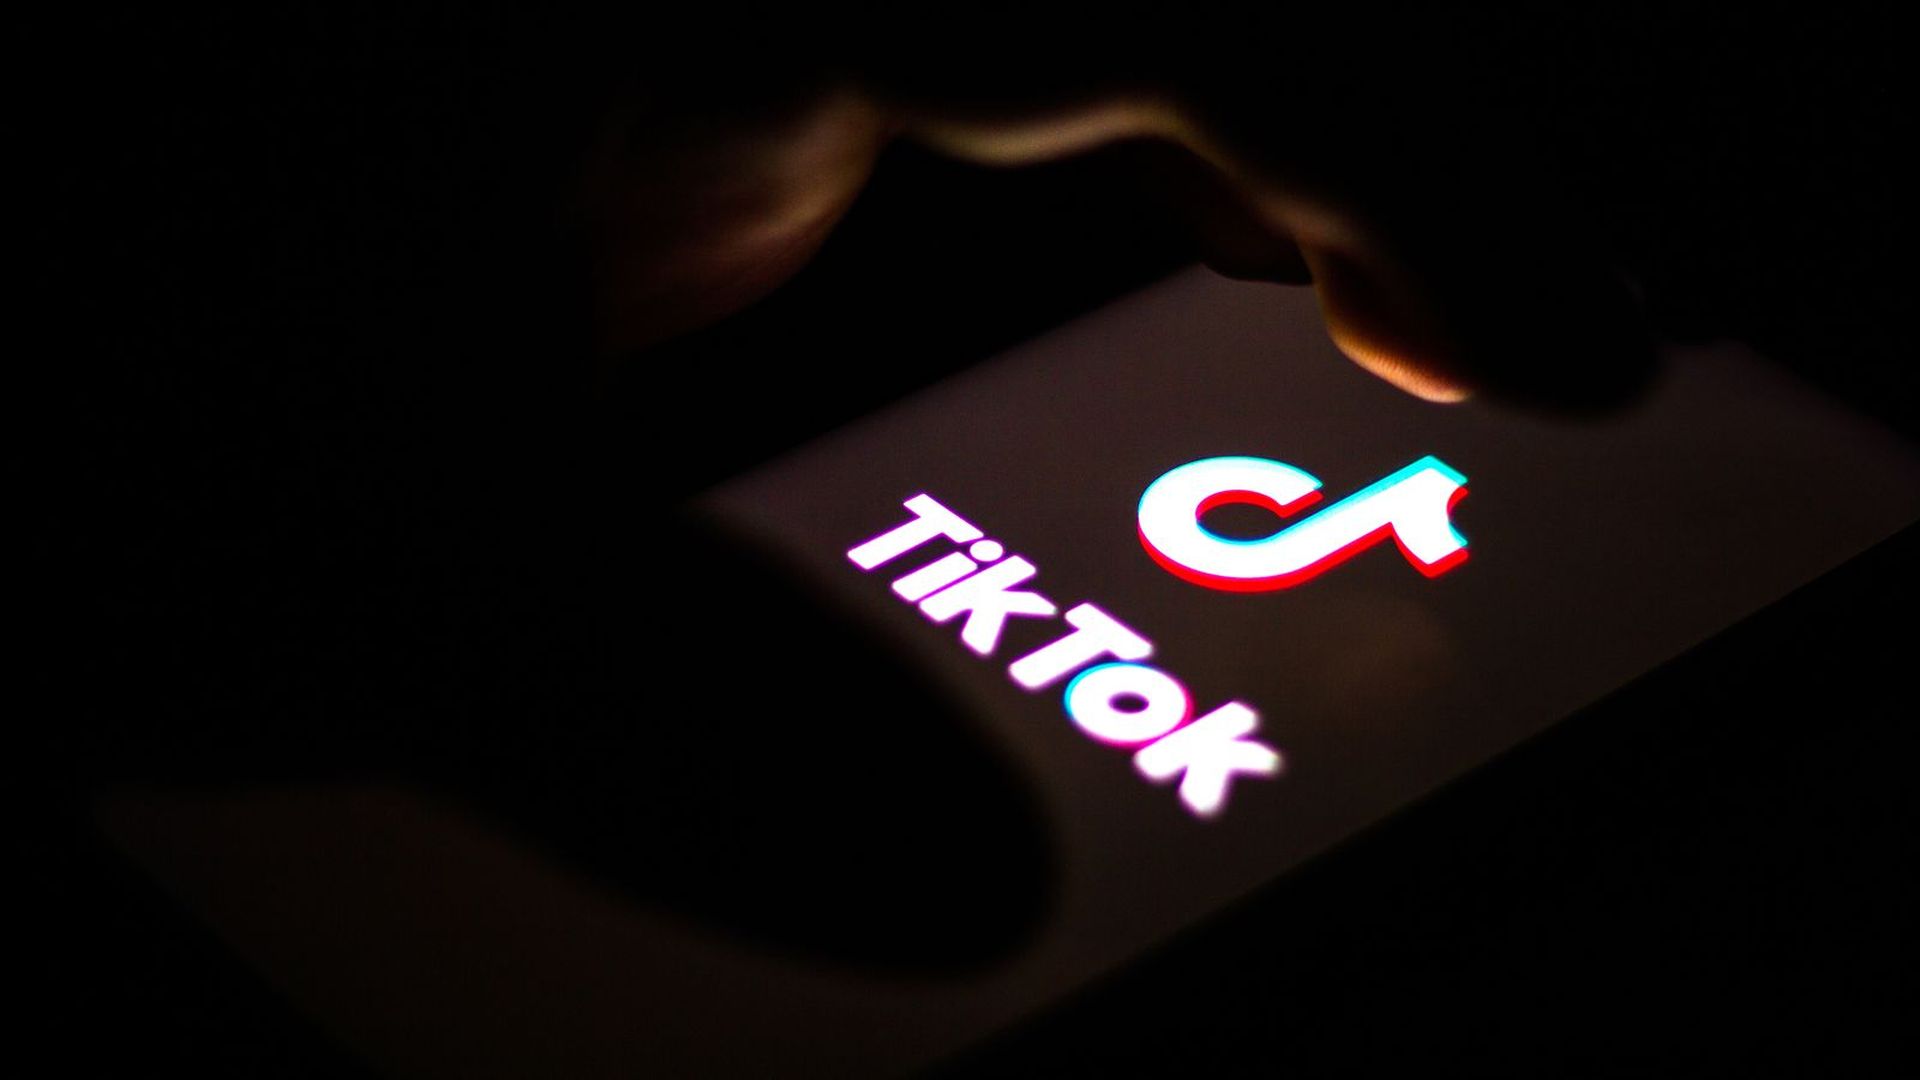 A photo of a TikTok logo on a smartphone